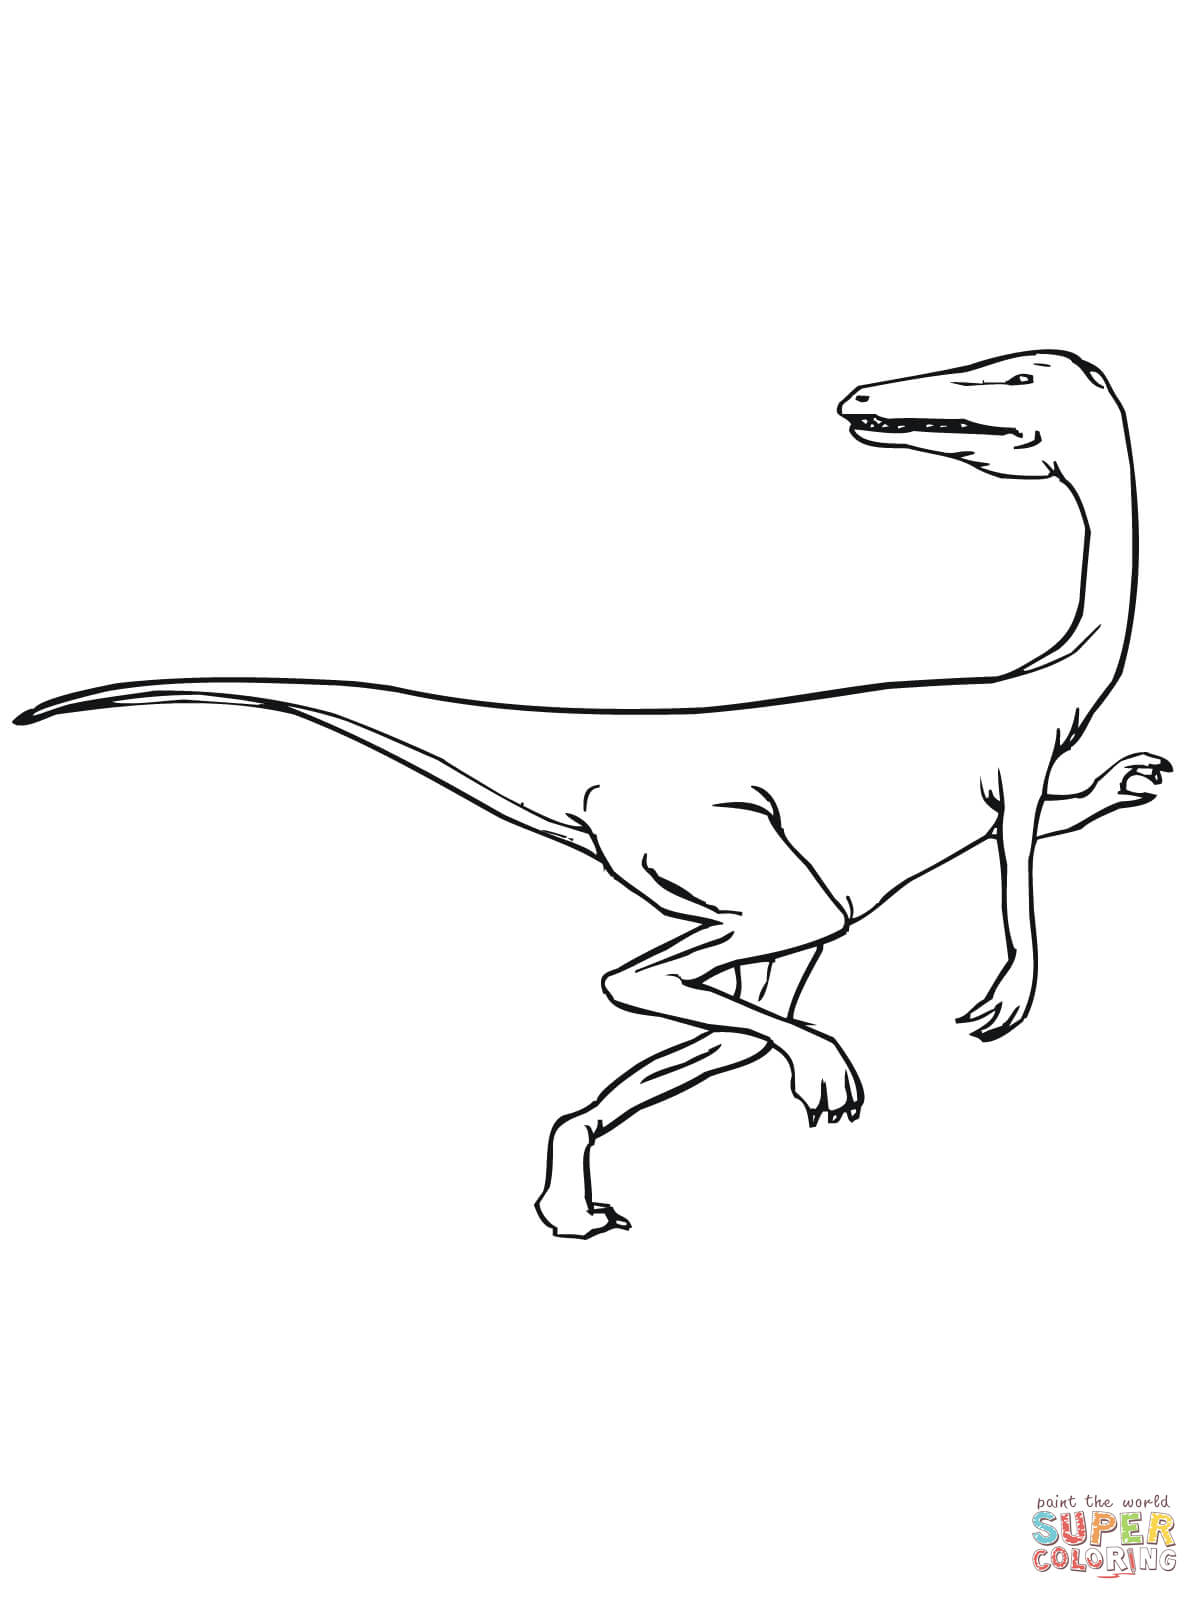 Featherless Velociraptor - Velociraptor coloring page